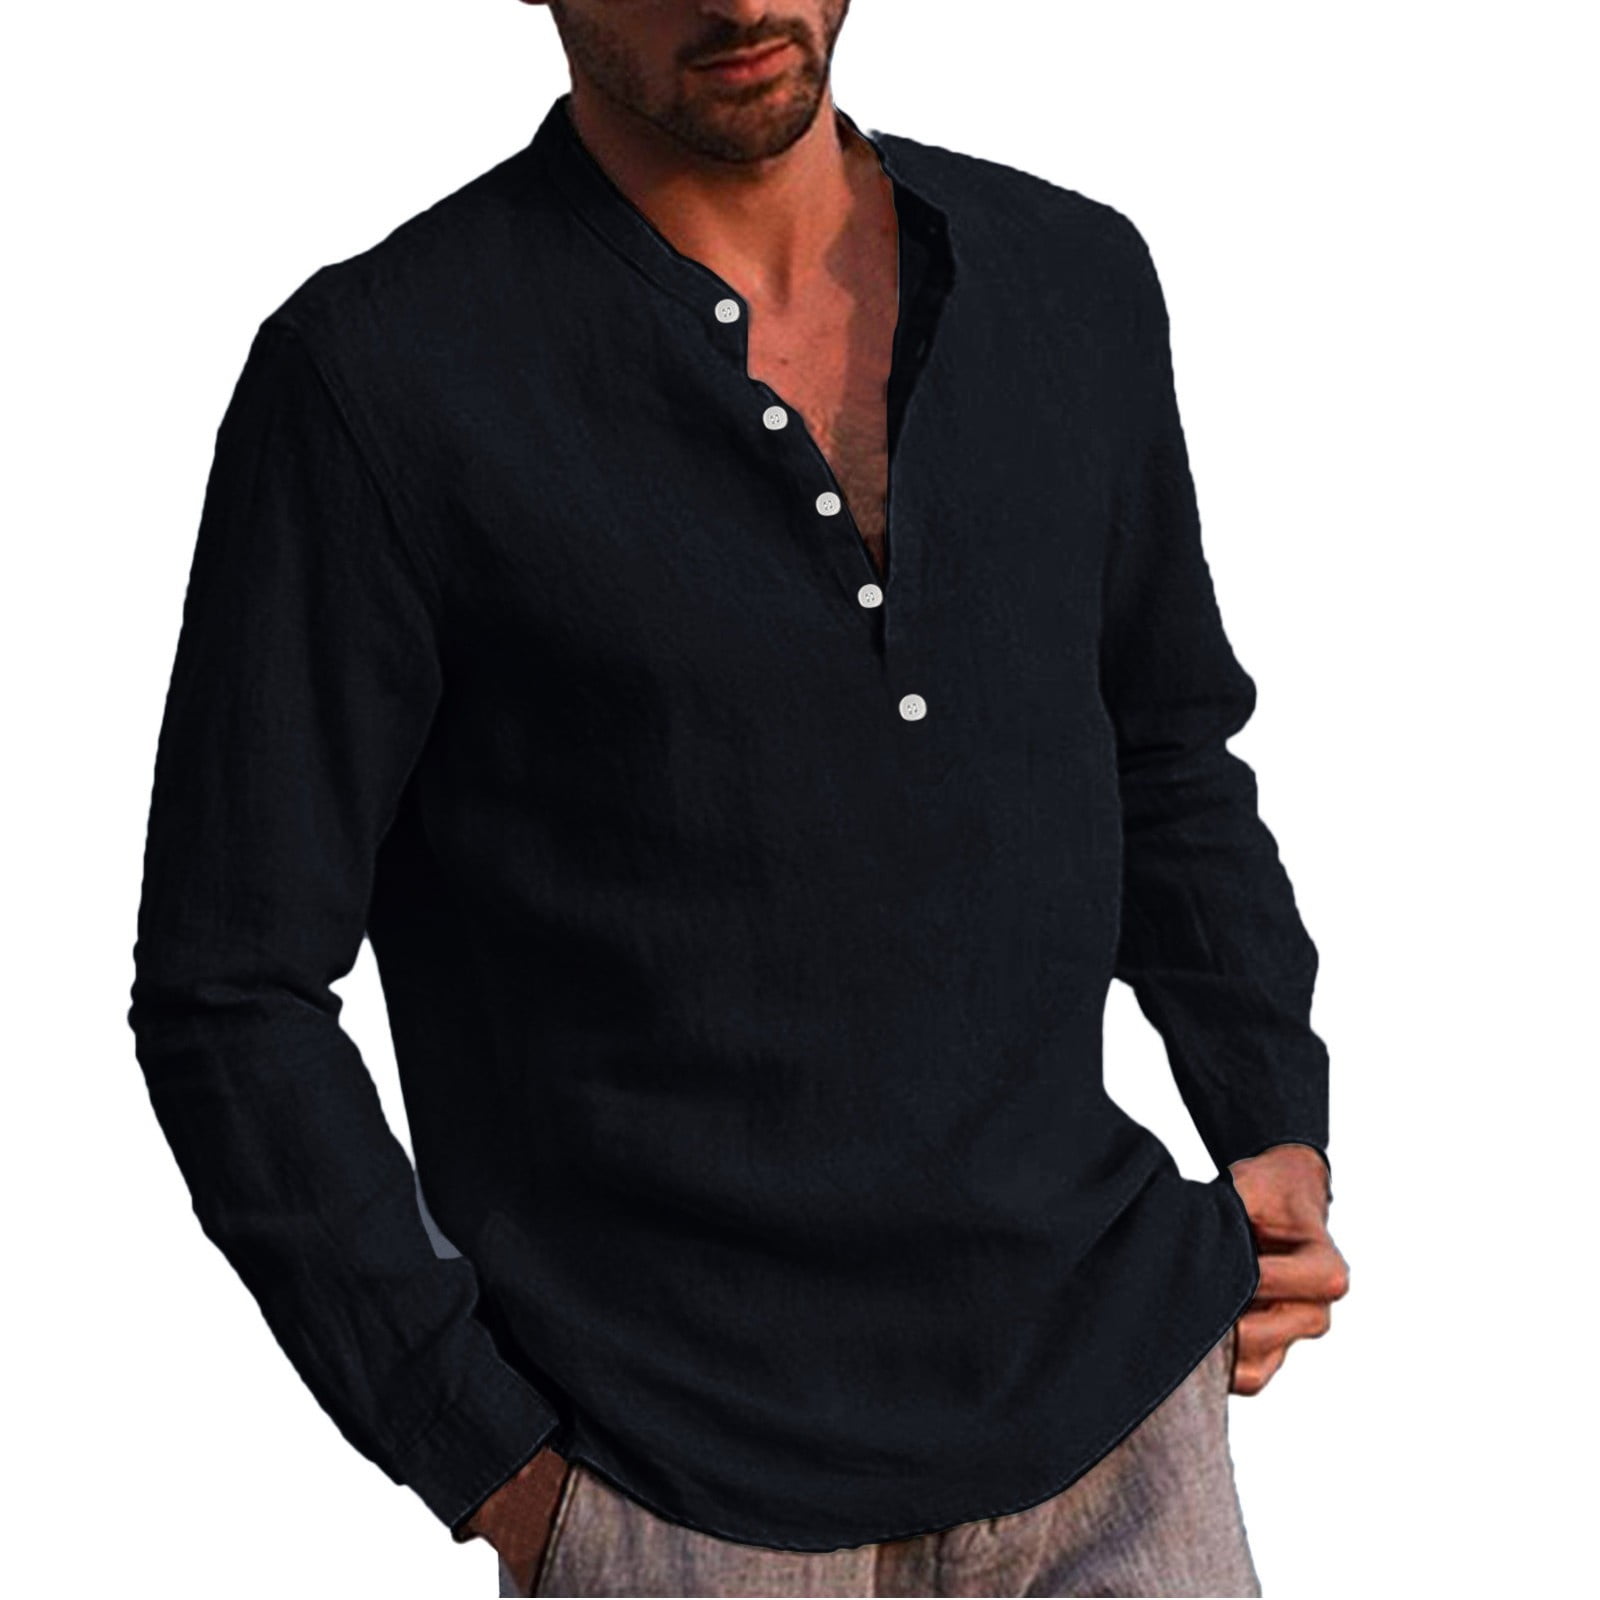 Sayhi Men Fashion Casual Top Shirt Simple Comfortable Solid Color 